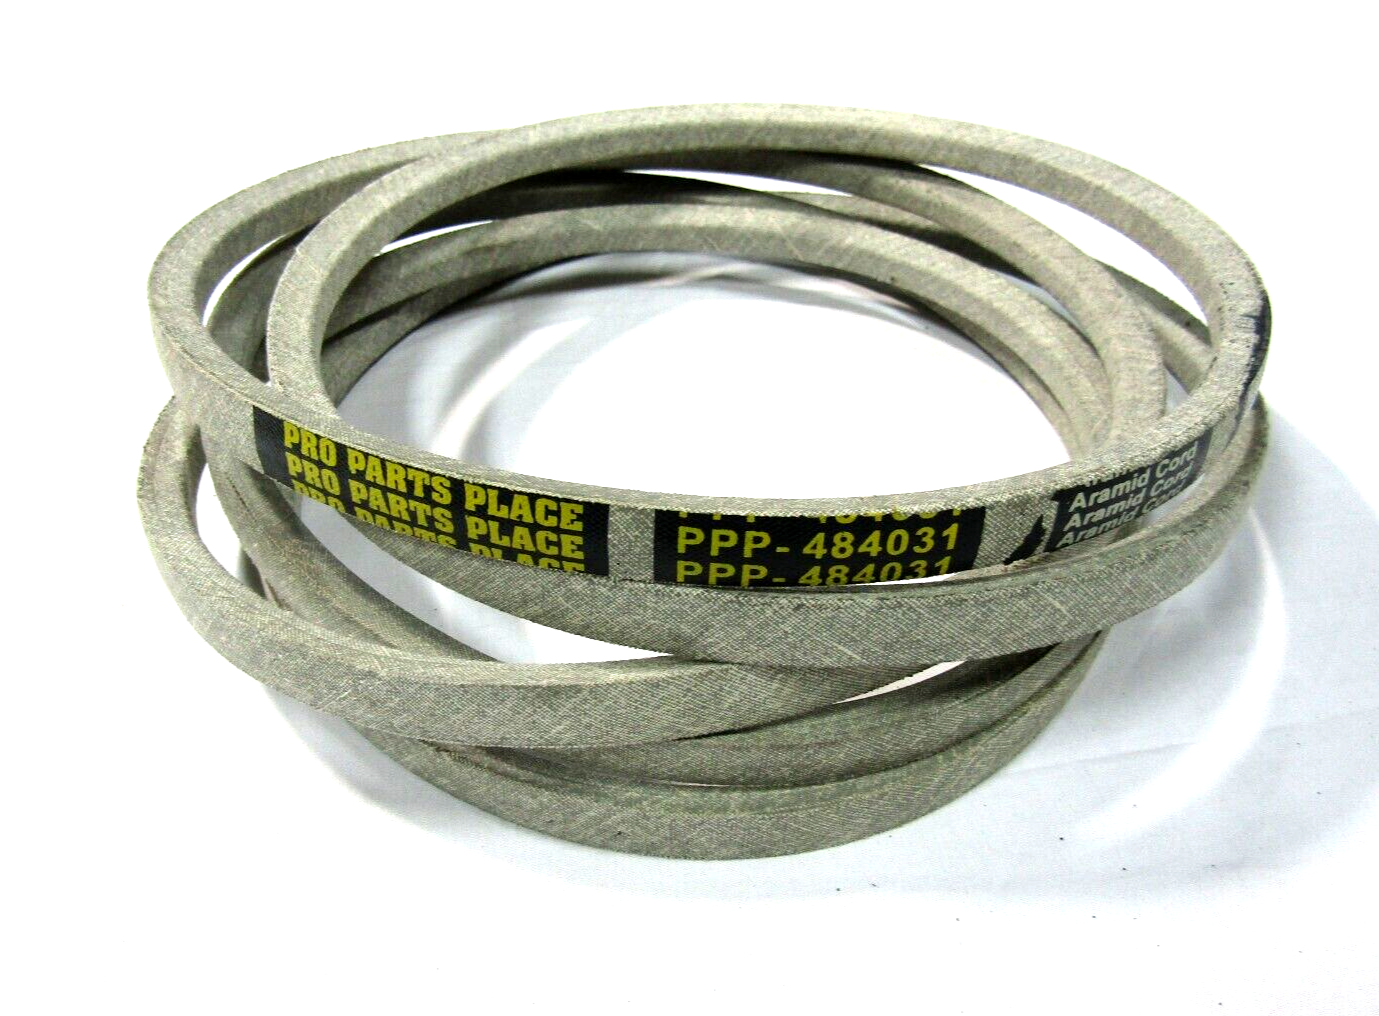 HD belt for Scag 484031 Scag Patriot 61" deck belt  & Freedom Z 52" & 61" Decks